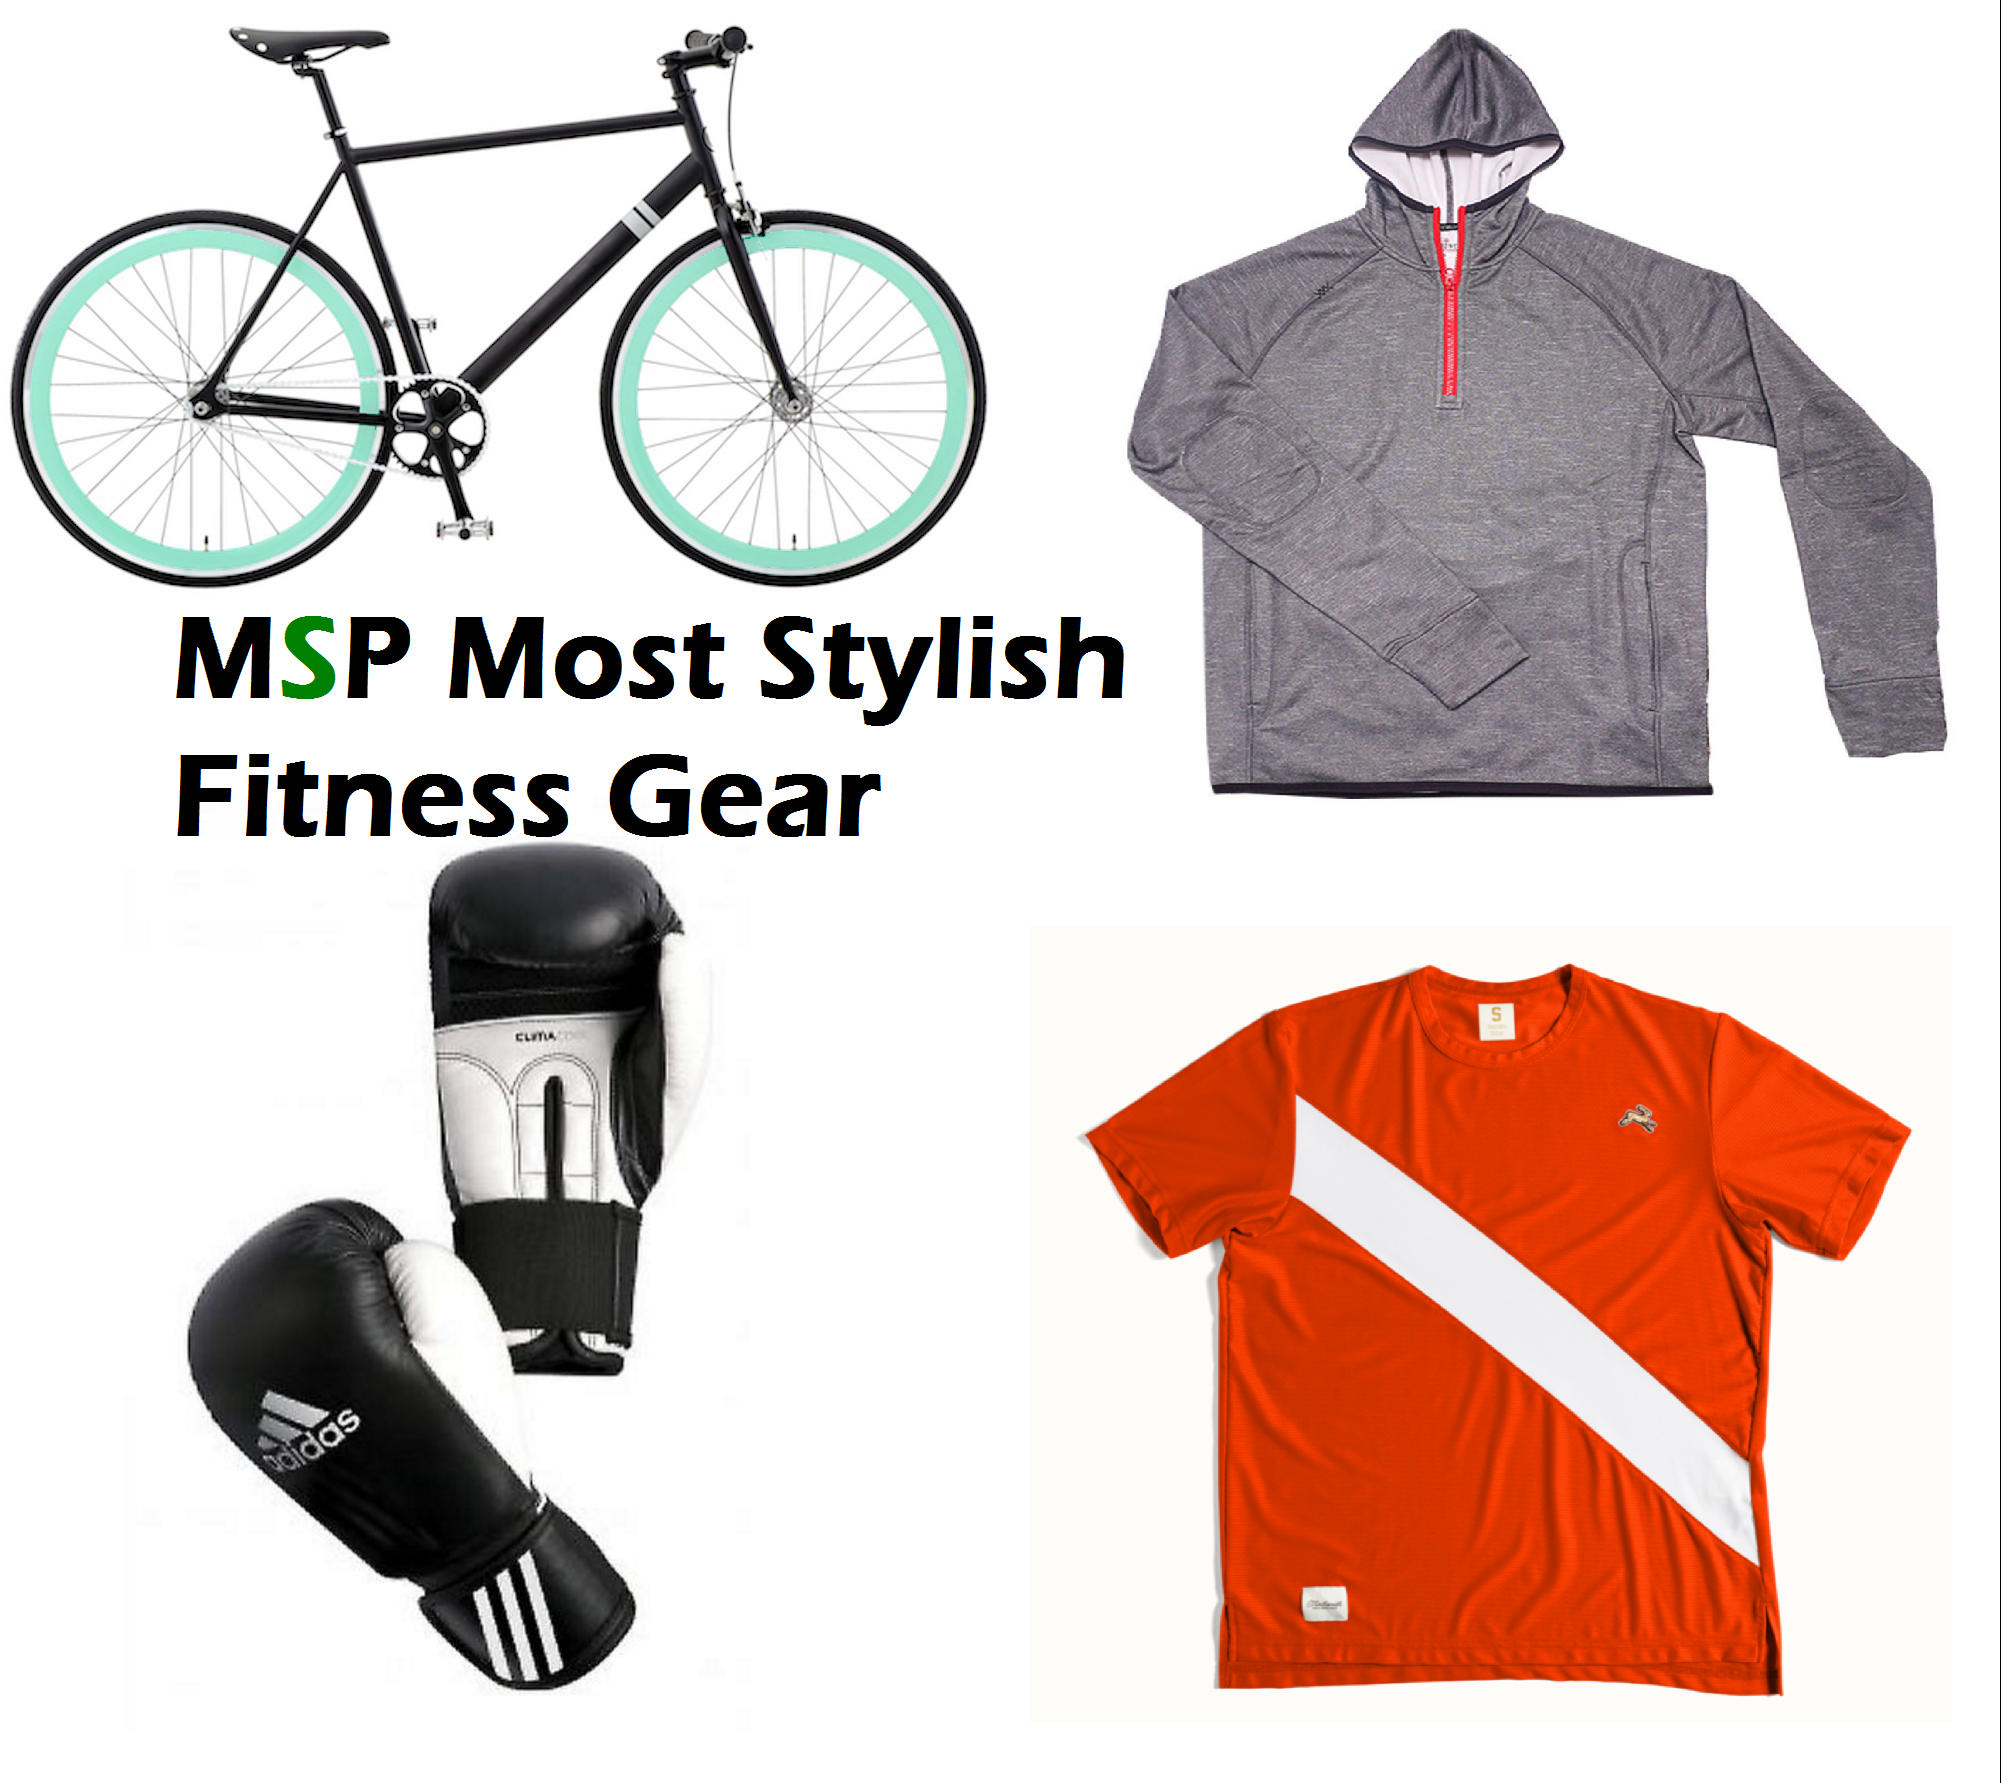 MSP Most Stylish Fitness Gear 2016